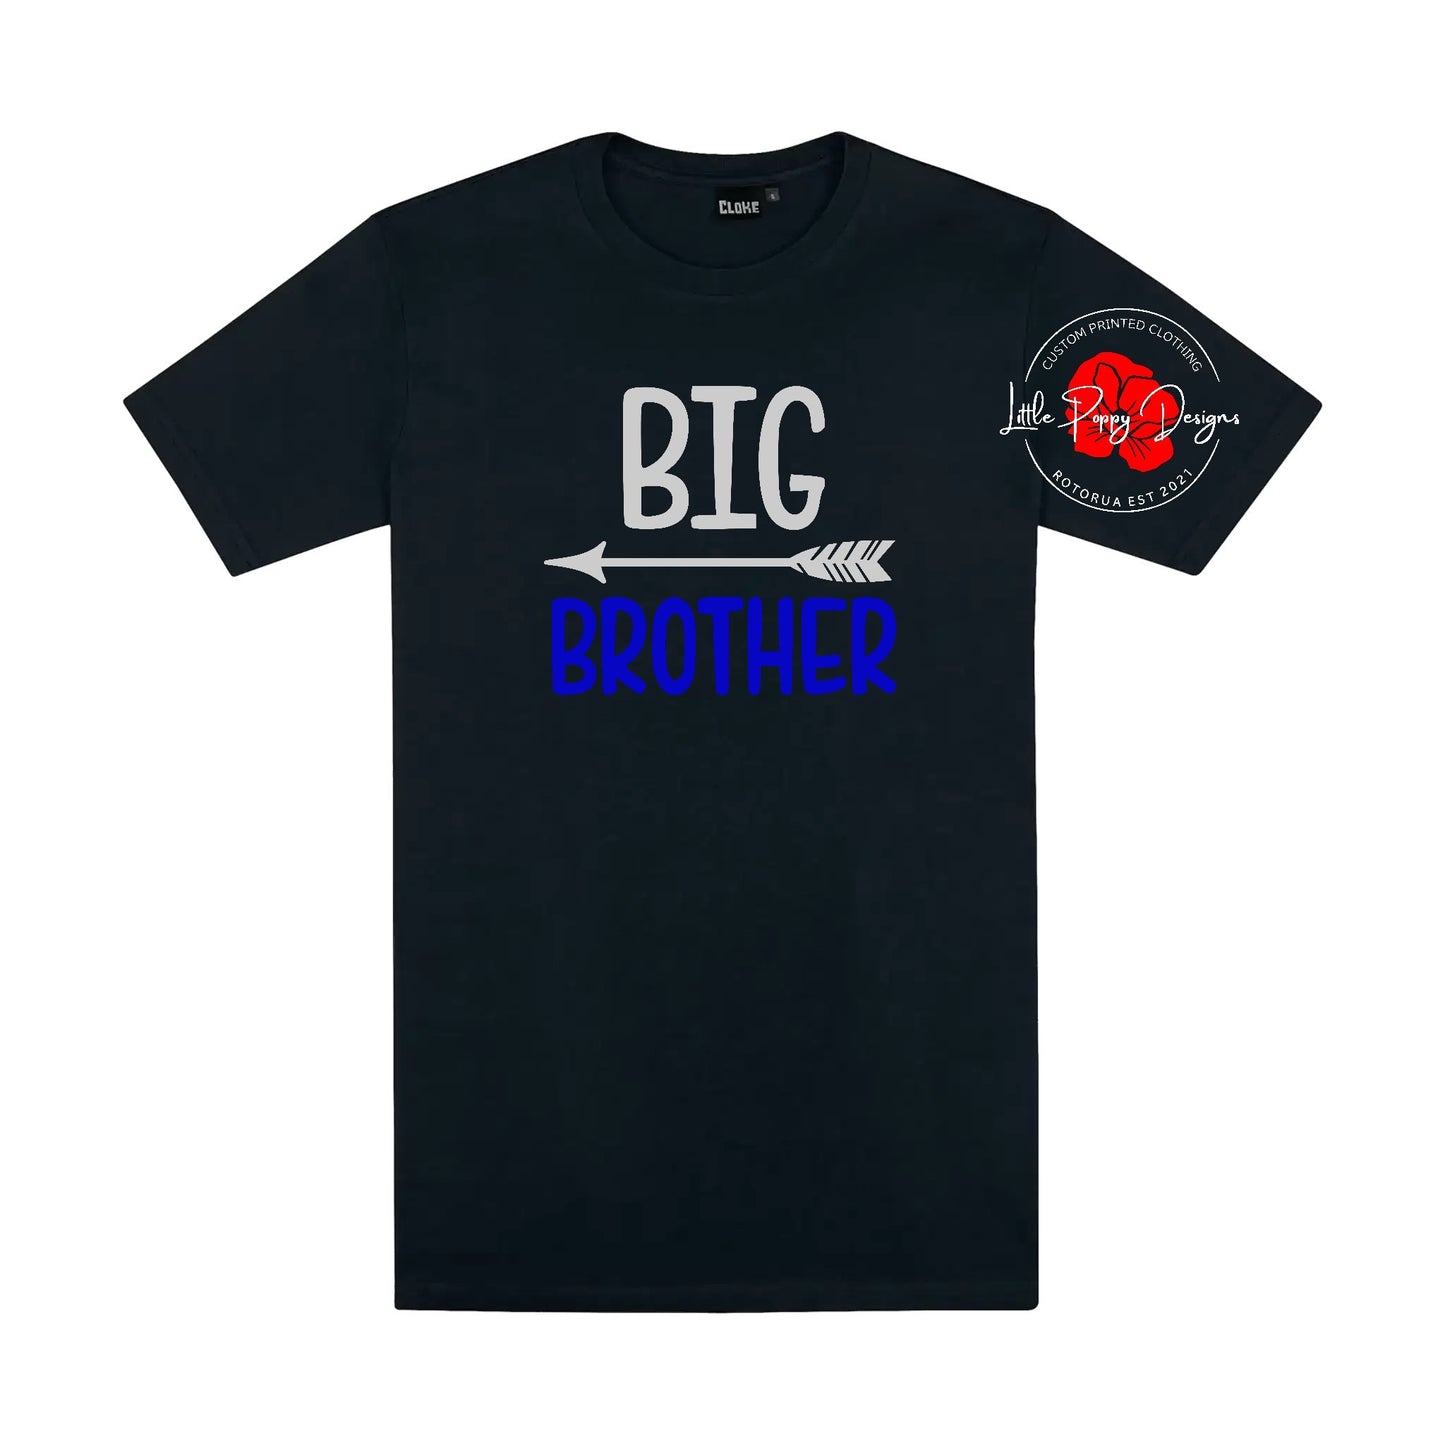 Big Brother Child's T-Shirt